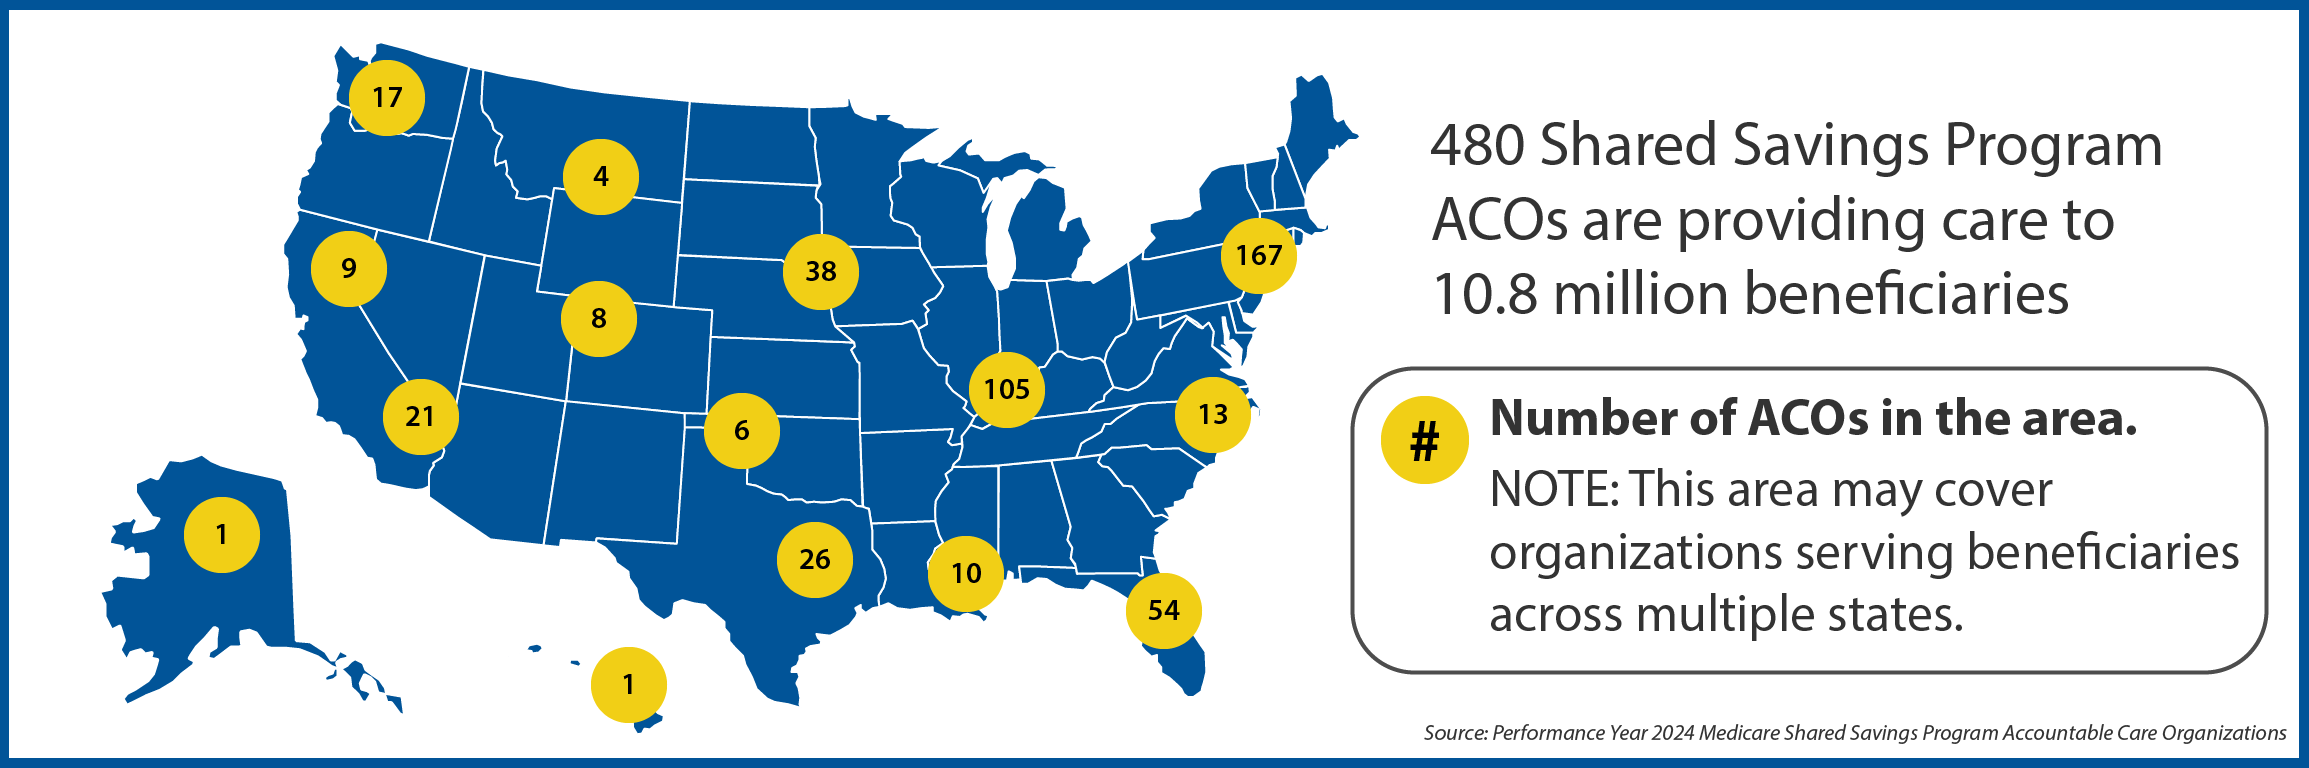 US map of 2024 ACOs. In Hawaii, 1; Alaska, 1; Pacific Northwest, 17; Northern California, 9; Southern California, 21; Montana, Wyoming, Idaho 4; Colorado, Utah, Wyoming 8; New Mexico, Oklahoma, 6; South Dakota, Nebraska, Iowa, Minnesota, 38; Texas, 26; Louisiana, 10; Illinois, Kentucky, Indiana 105; Florida, 54; Virginia, North Carolina, 13; New England, 167. 480 Shared Savings Program ACOs are providing care to 10.8 million beneficiaries. This area may cover organizations serving across multiple states.